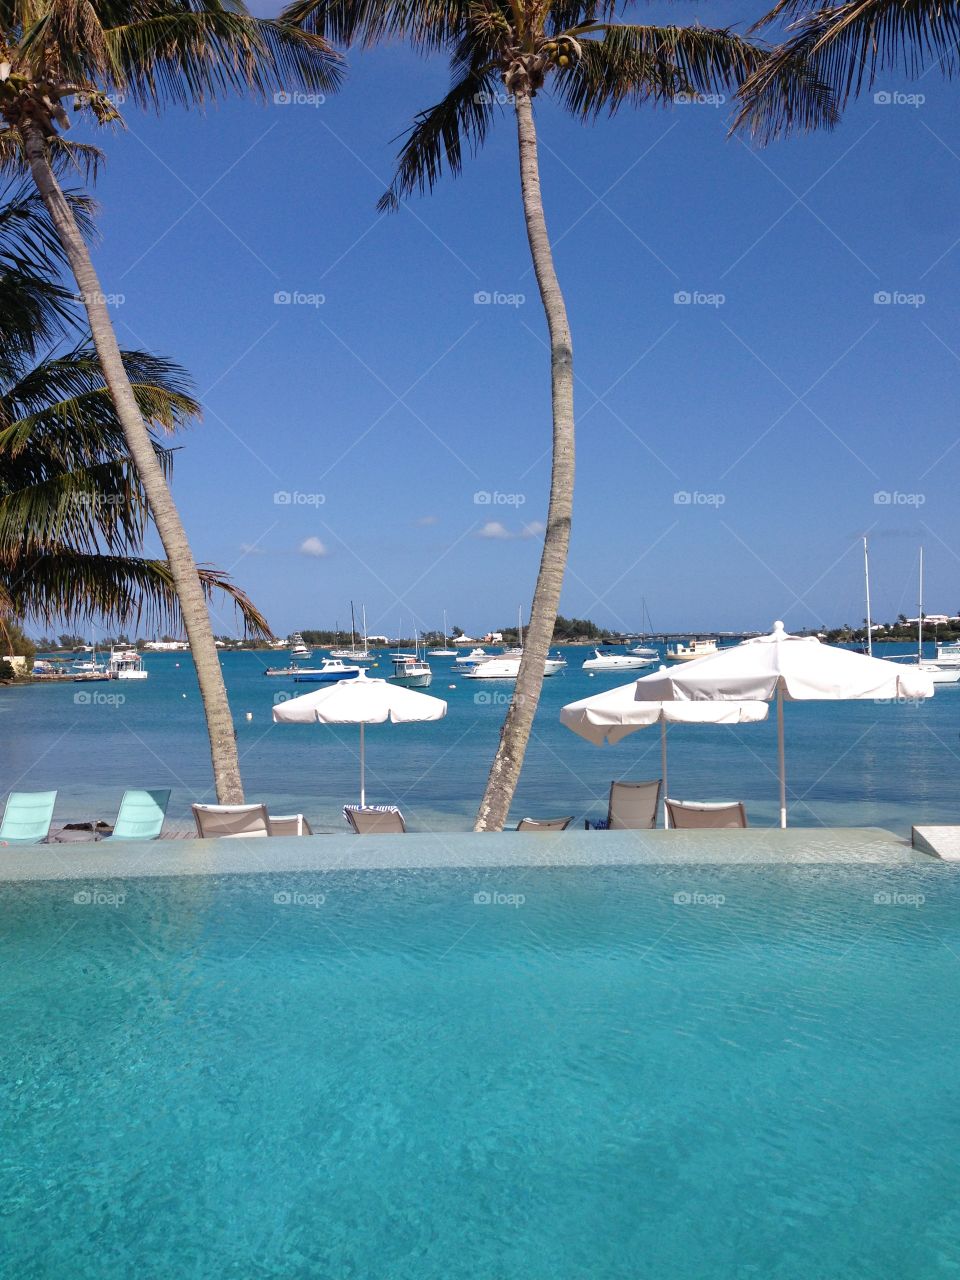 Gorgeous view poolside in Bermuda